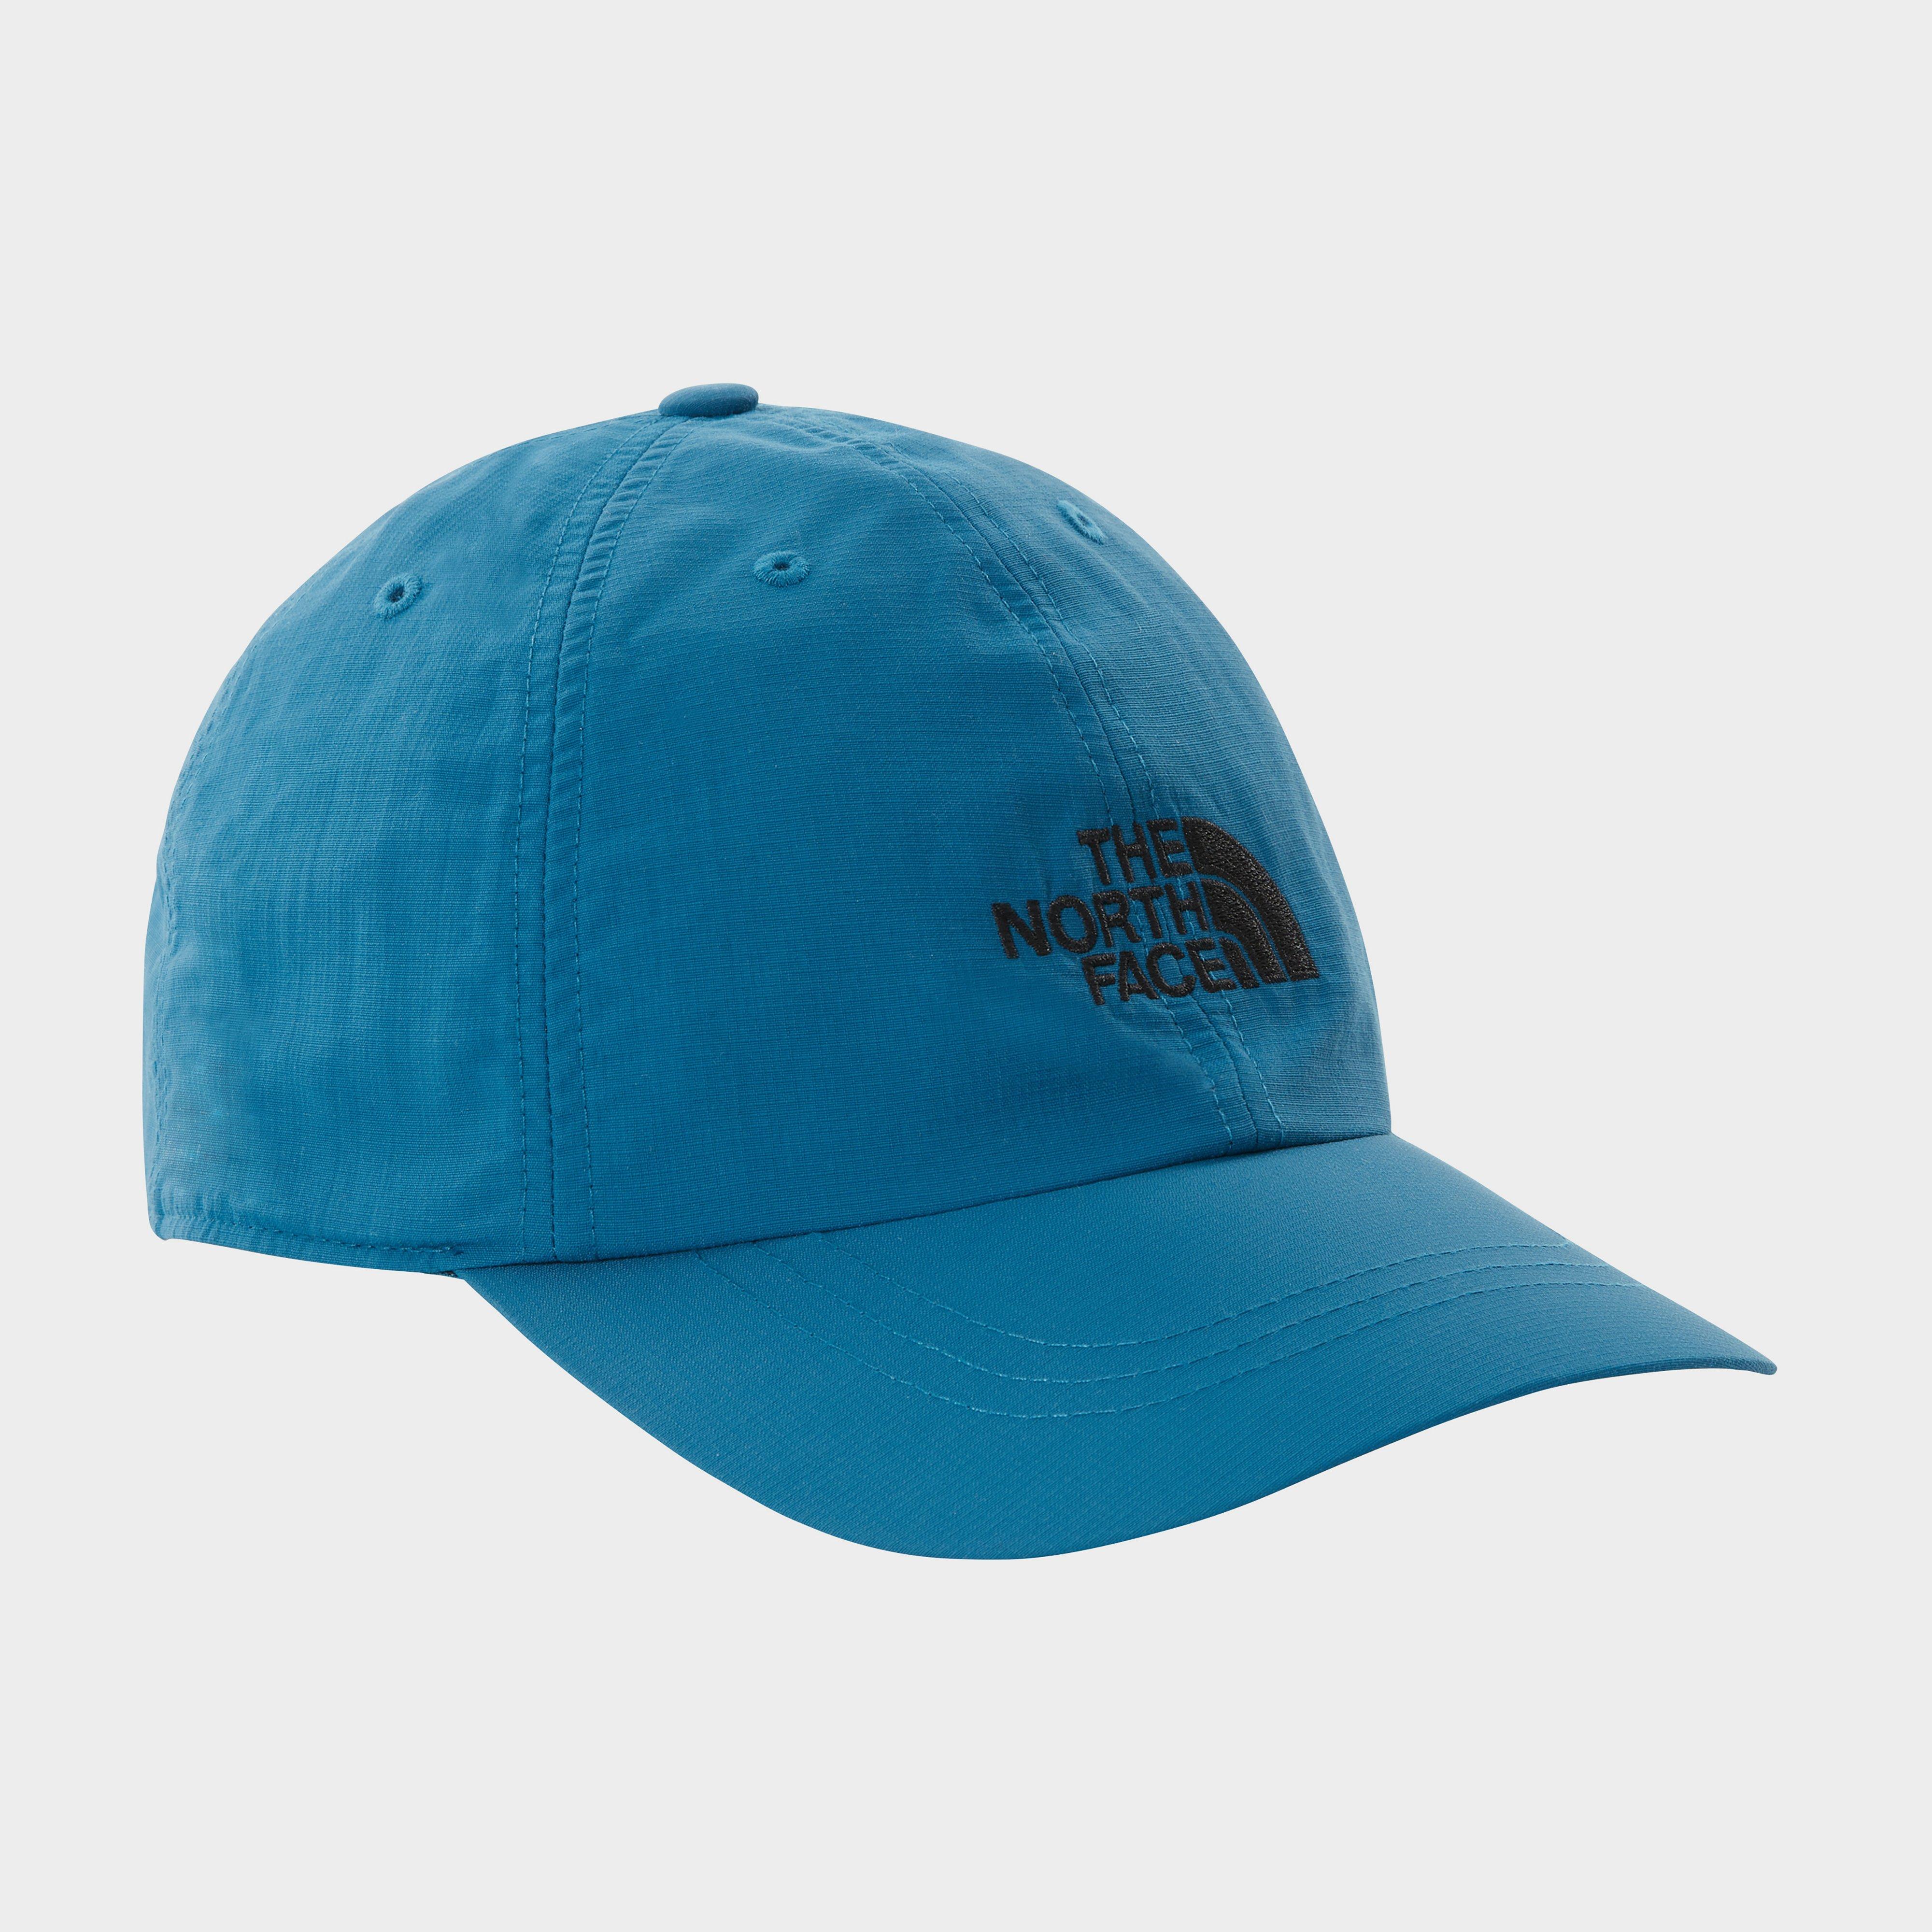 The North Face Men's Horizon Mesh Cap, Blue